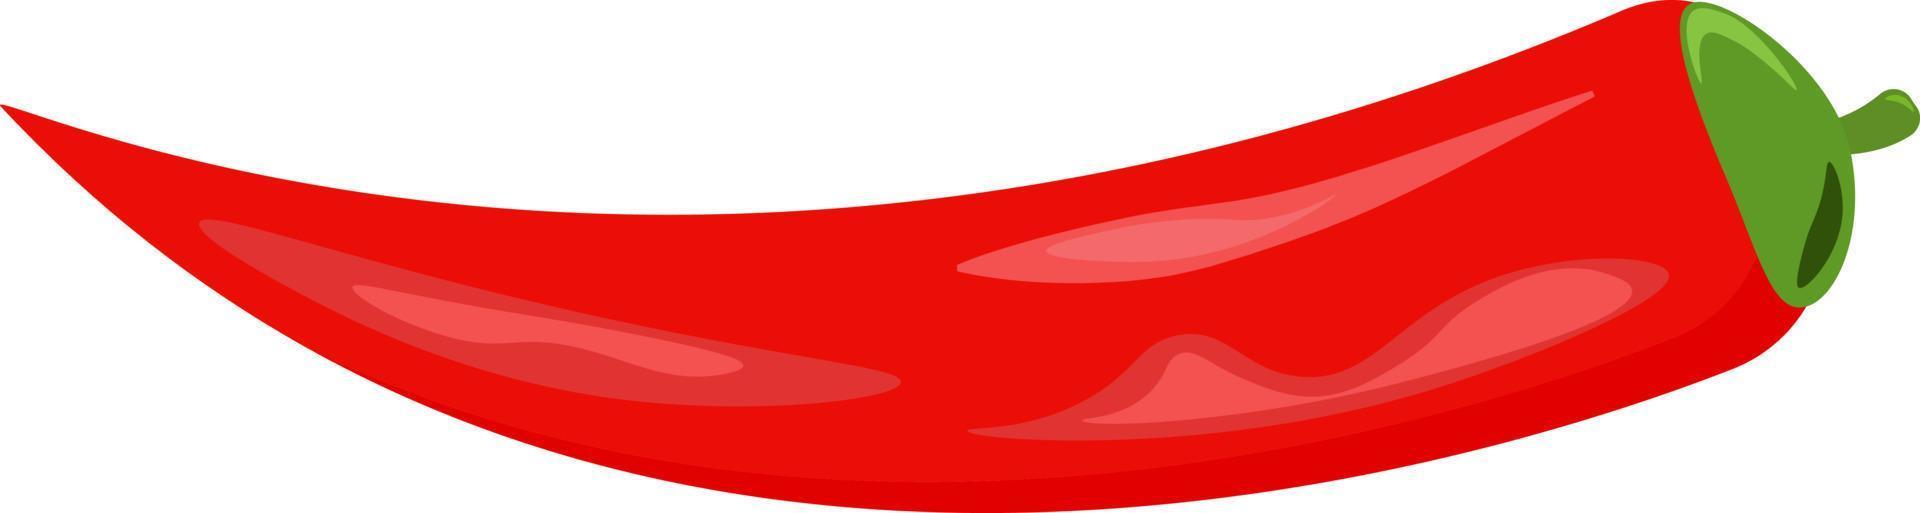 Red hot pepper, illustration, vector on white background.